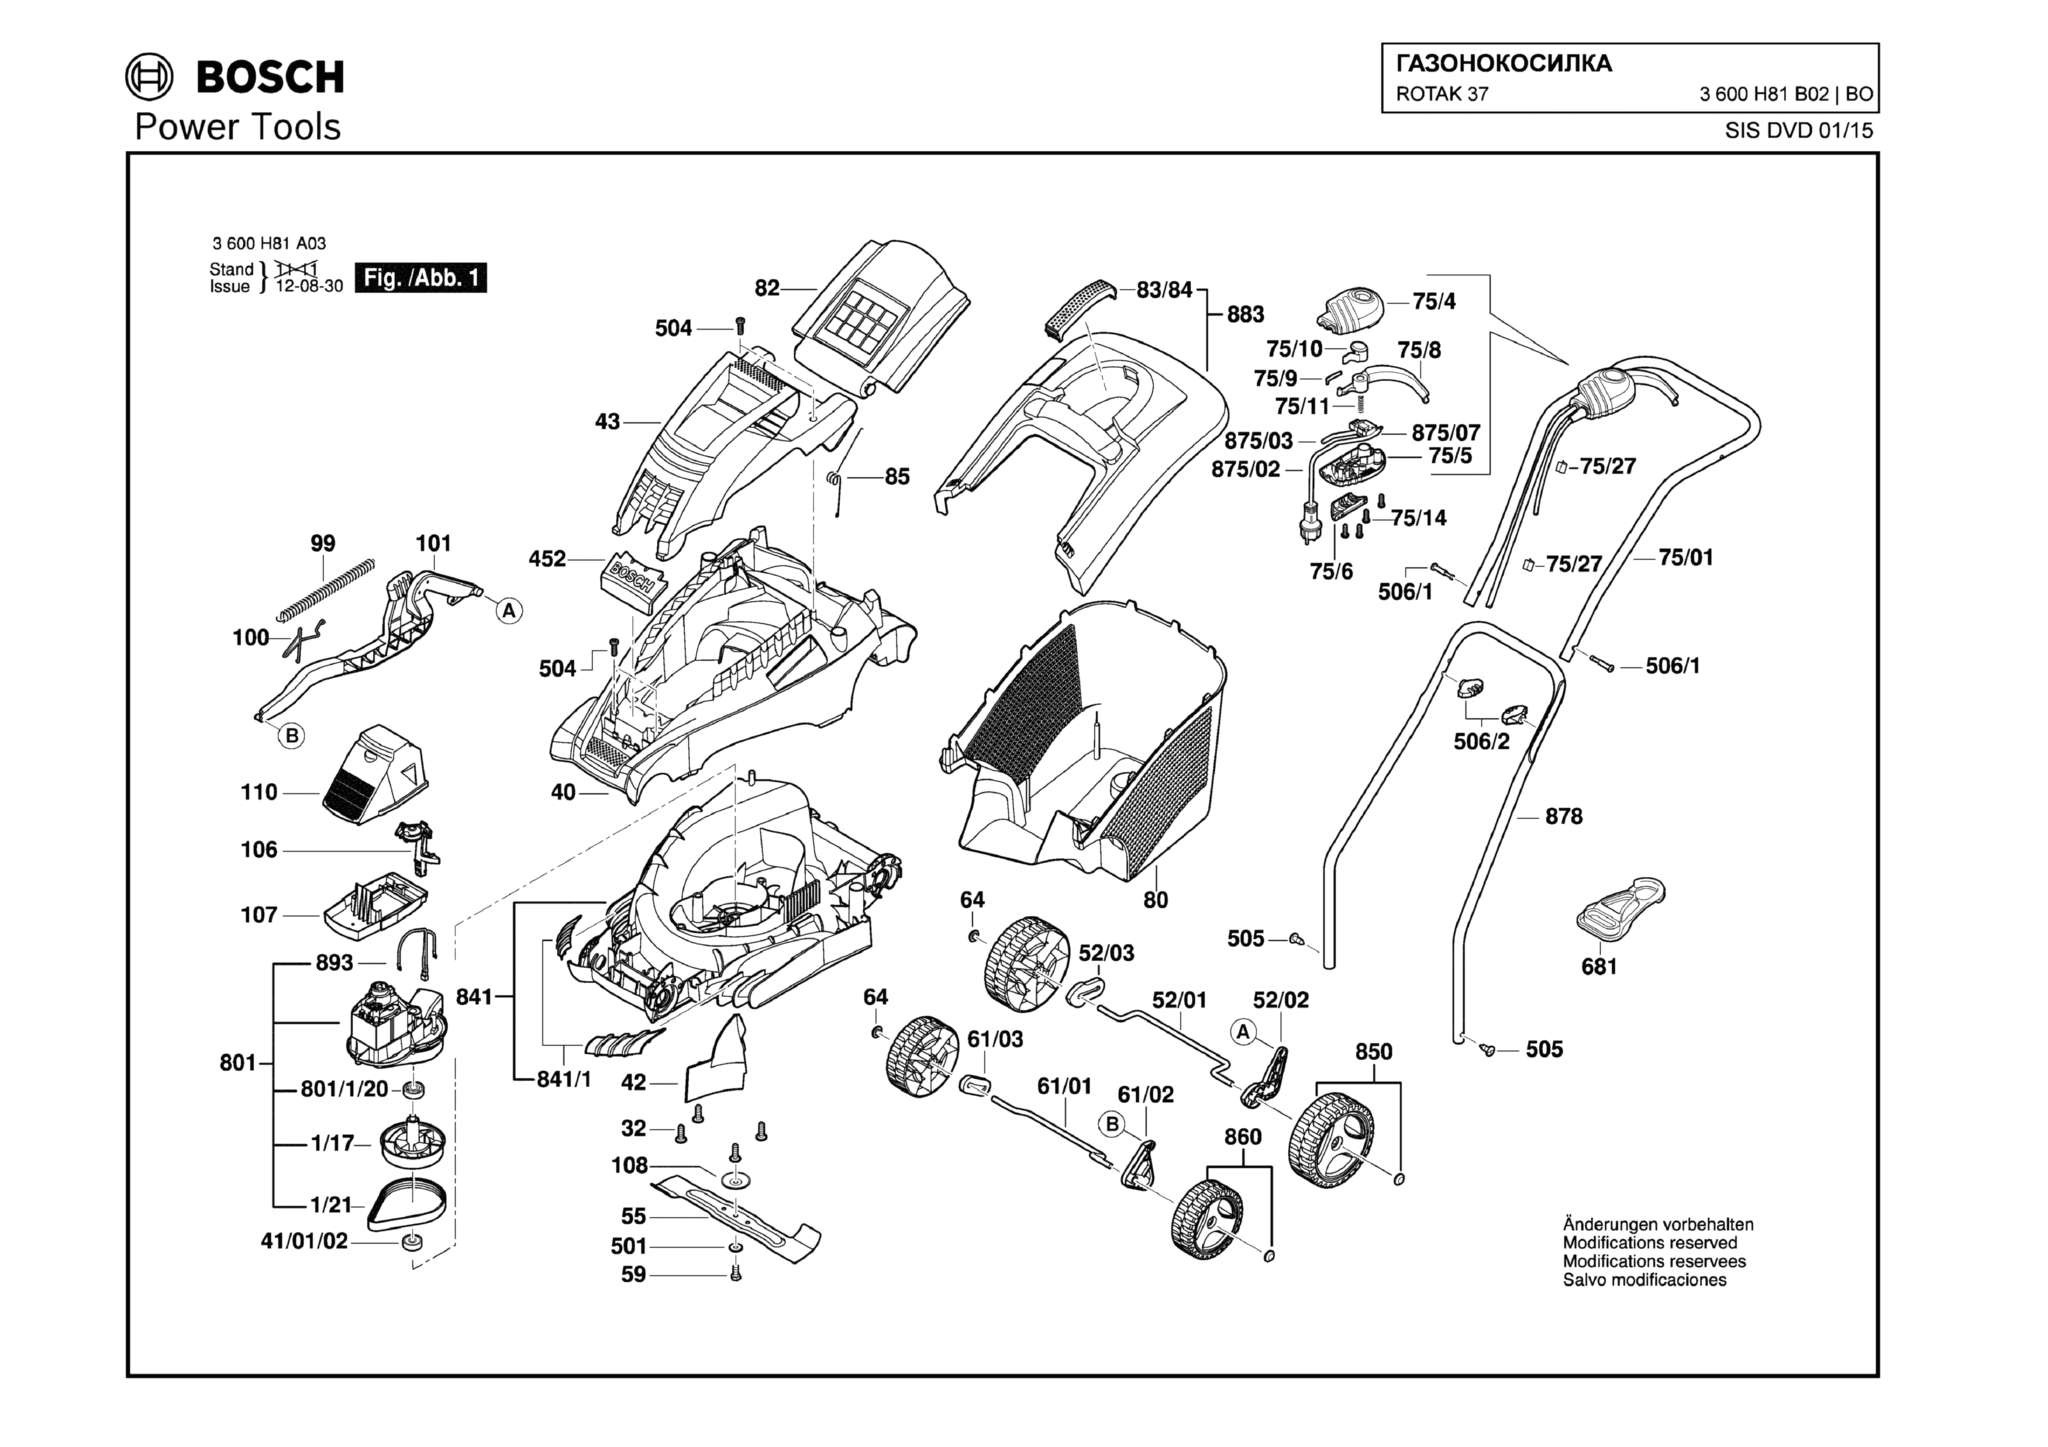 Запчасти, схема и деталировка Bosch ROTAK 37 (ТИП 3600H81B02)